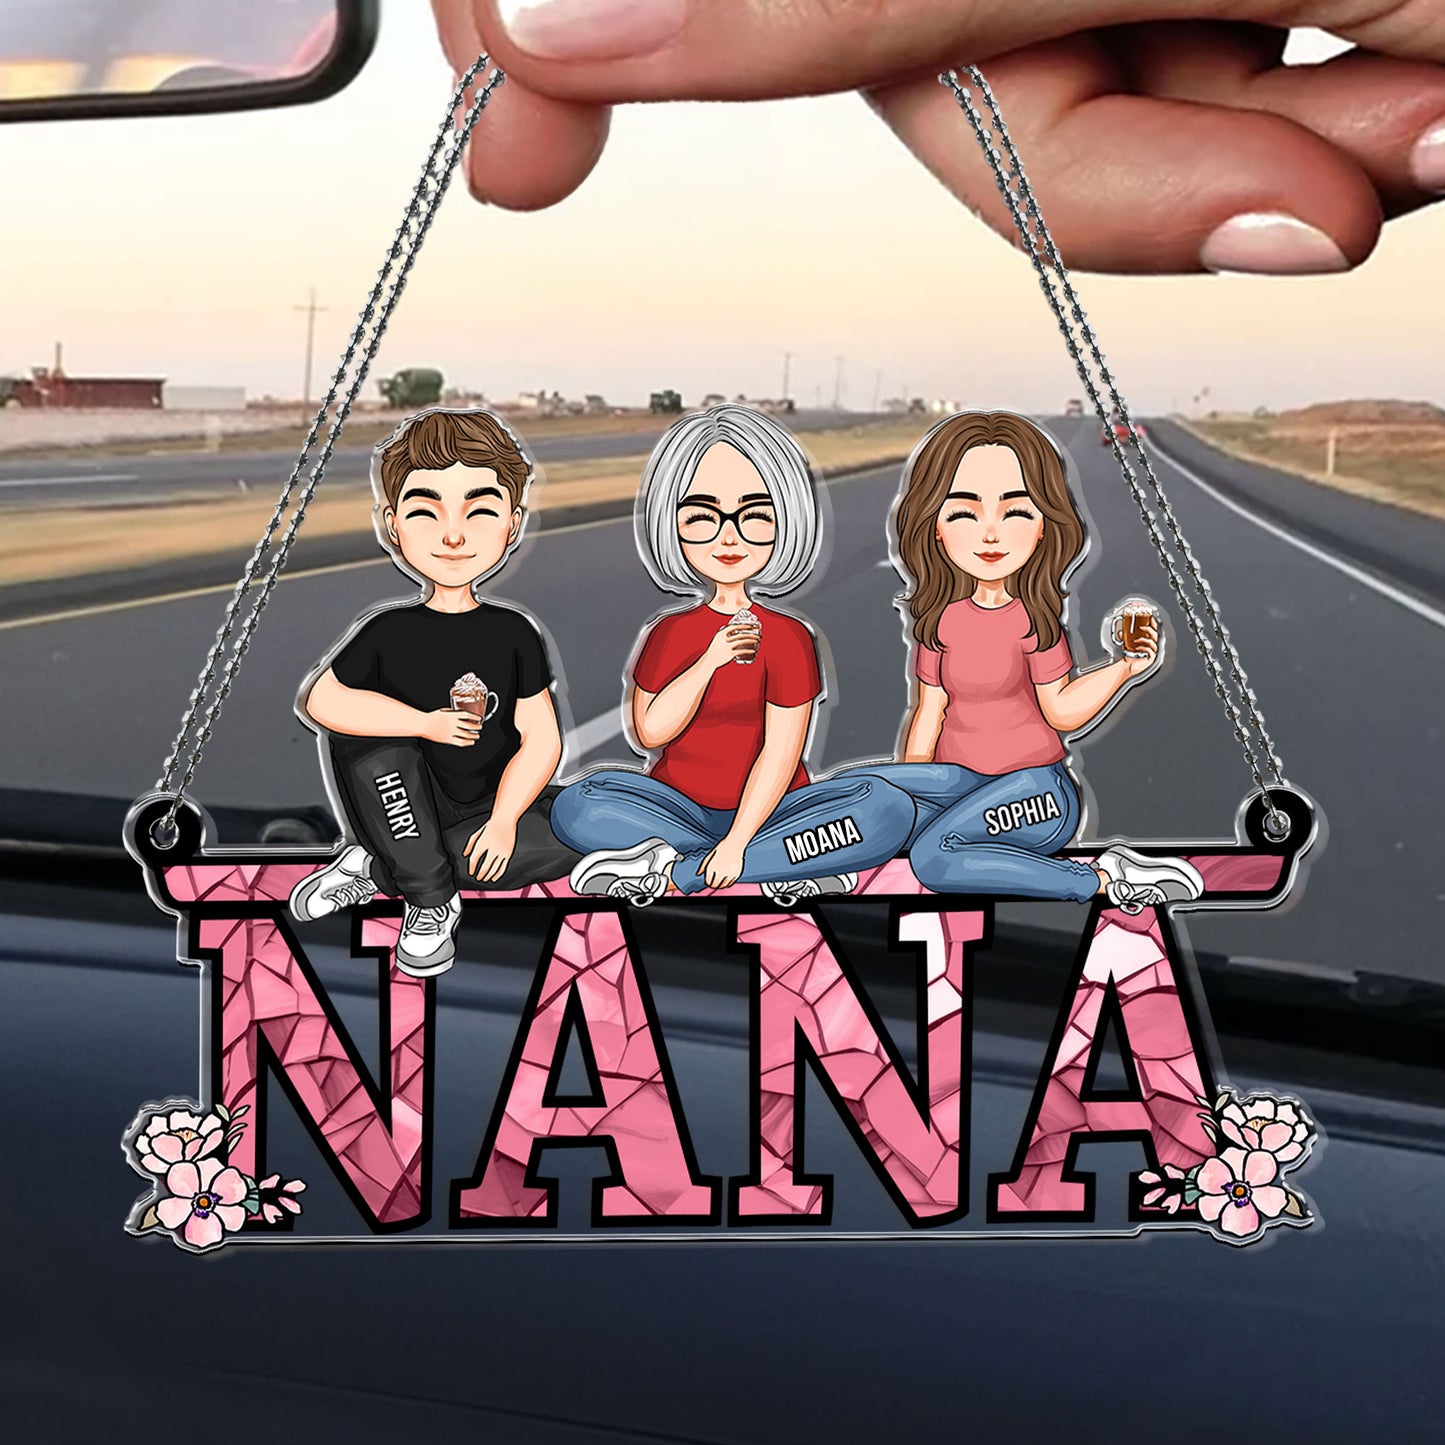 Nana - Children, Sitting Together - Personalized Car Ornament